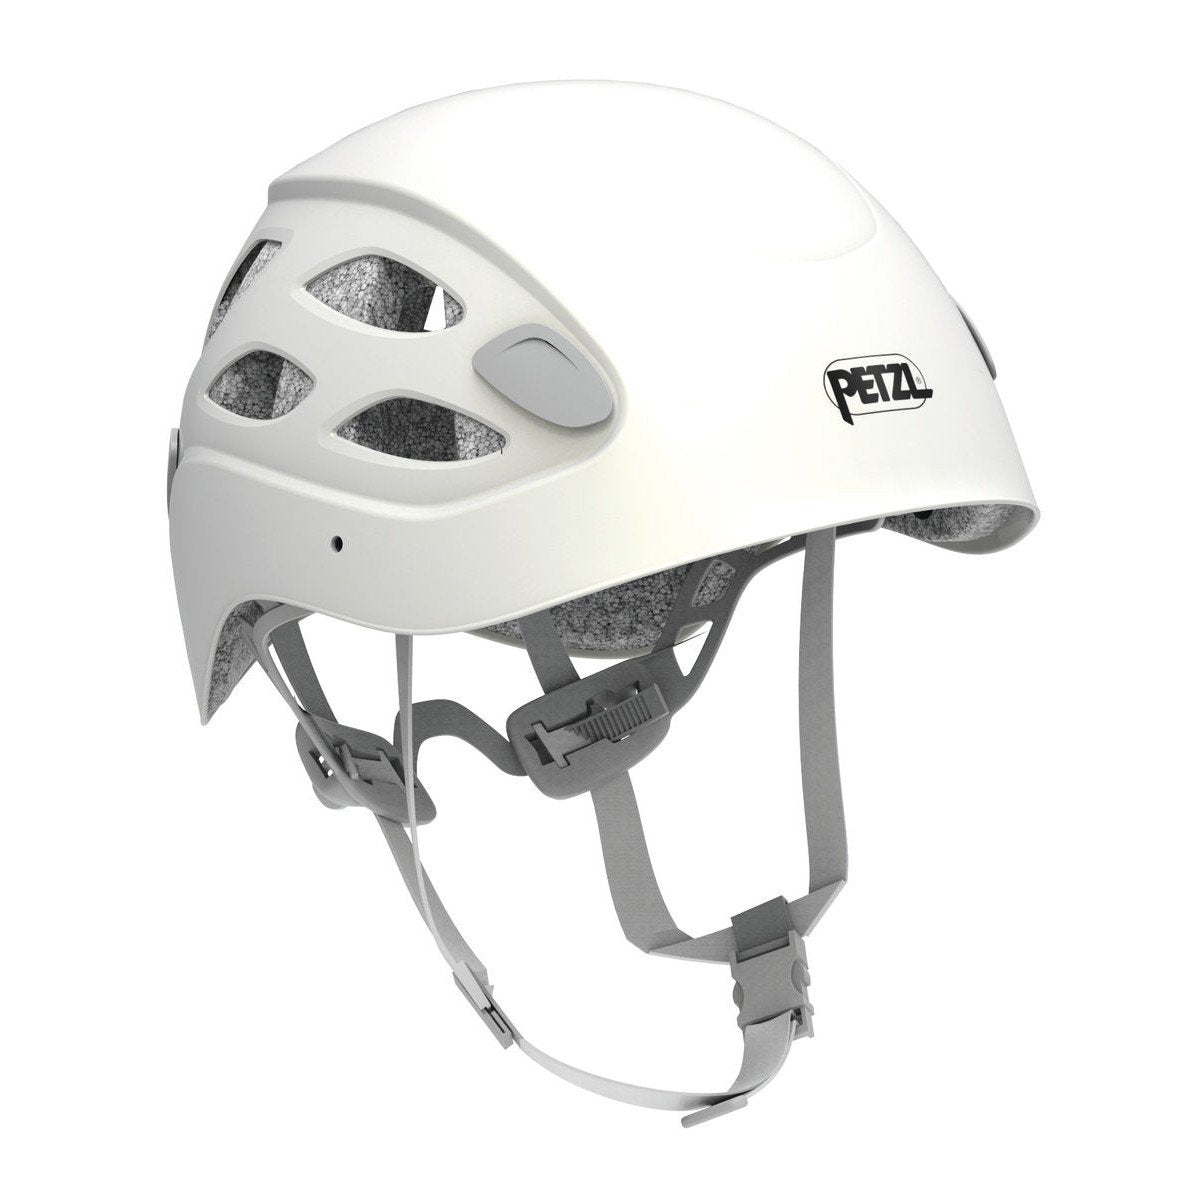 Petzl Borea multi-sport helmet, front/side view in white colour